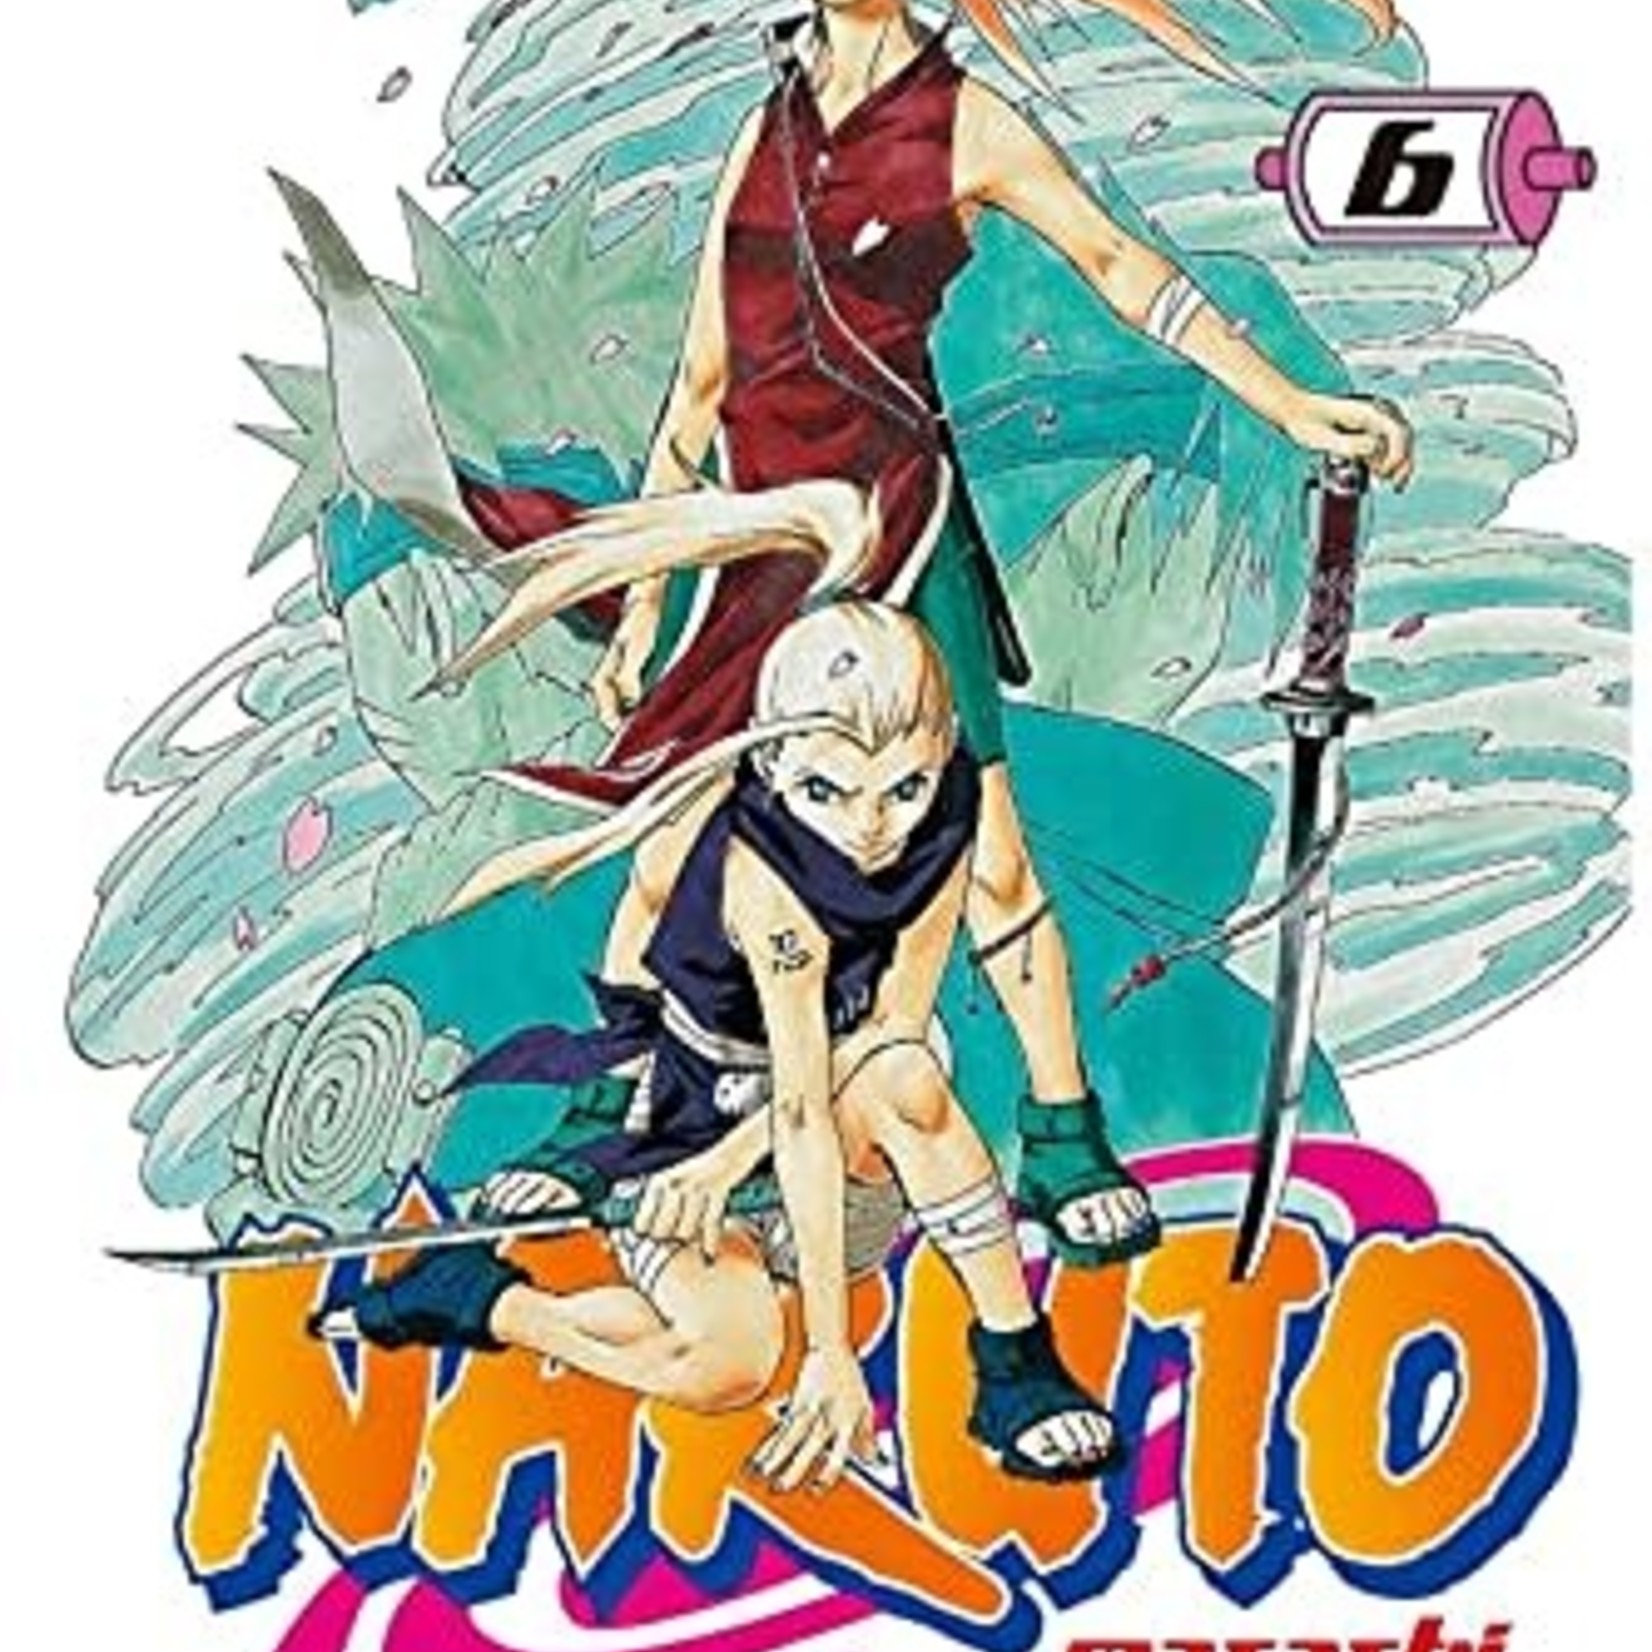 Kana Manga - Naruto Tome 06